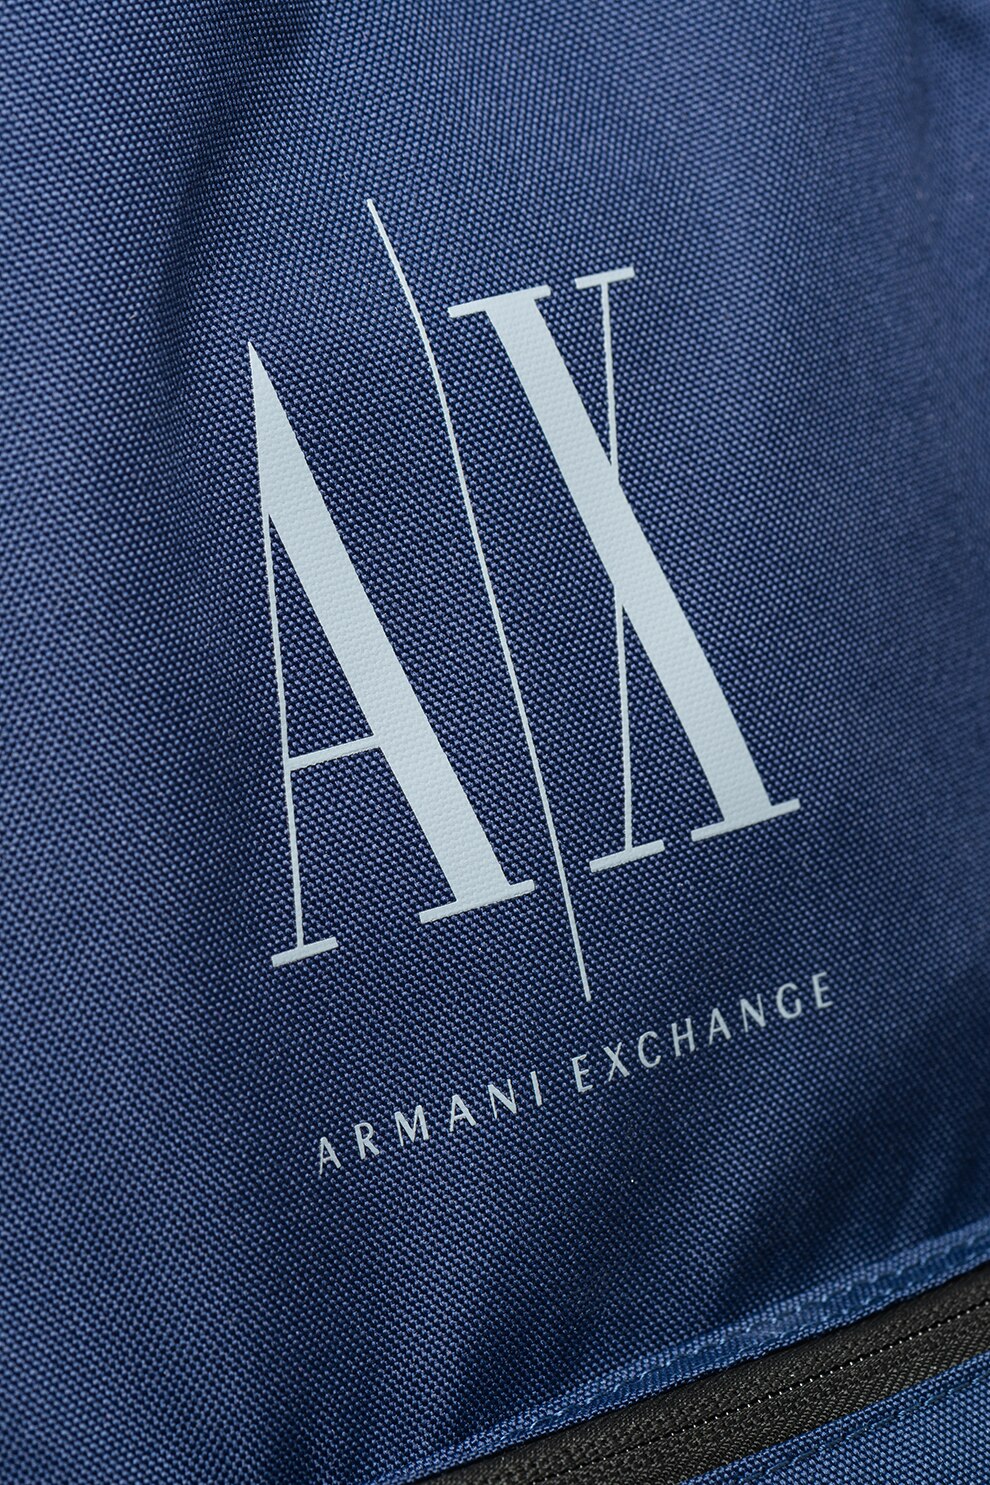 ARMANI EXCHANGE, Rucsac cu imprimeu logo, Indigo - eMAG.ro